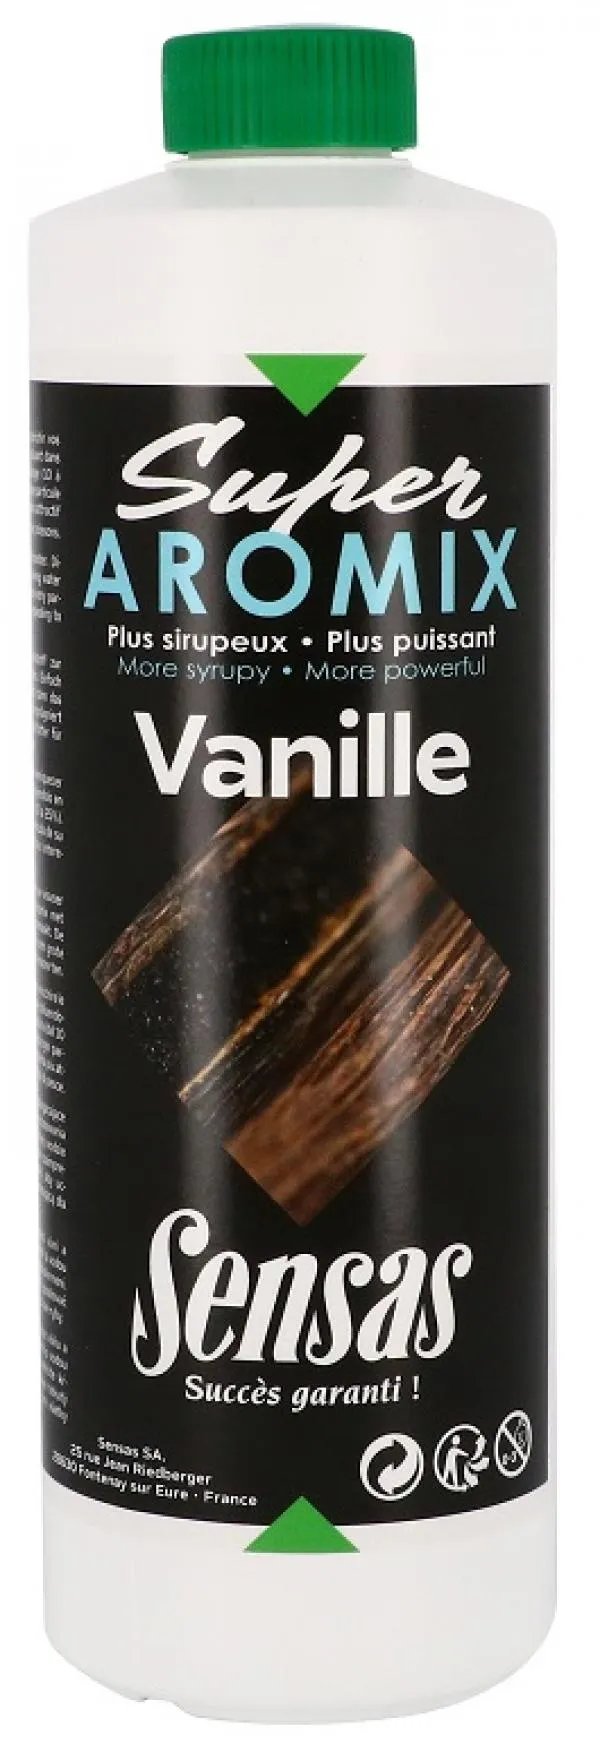 Sensas Attraktor Aromix Vanille (vanília) 500ml